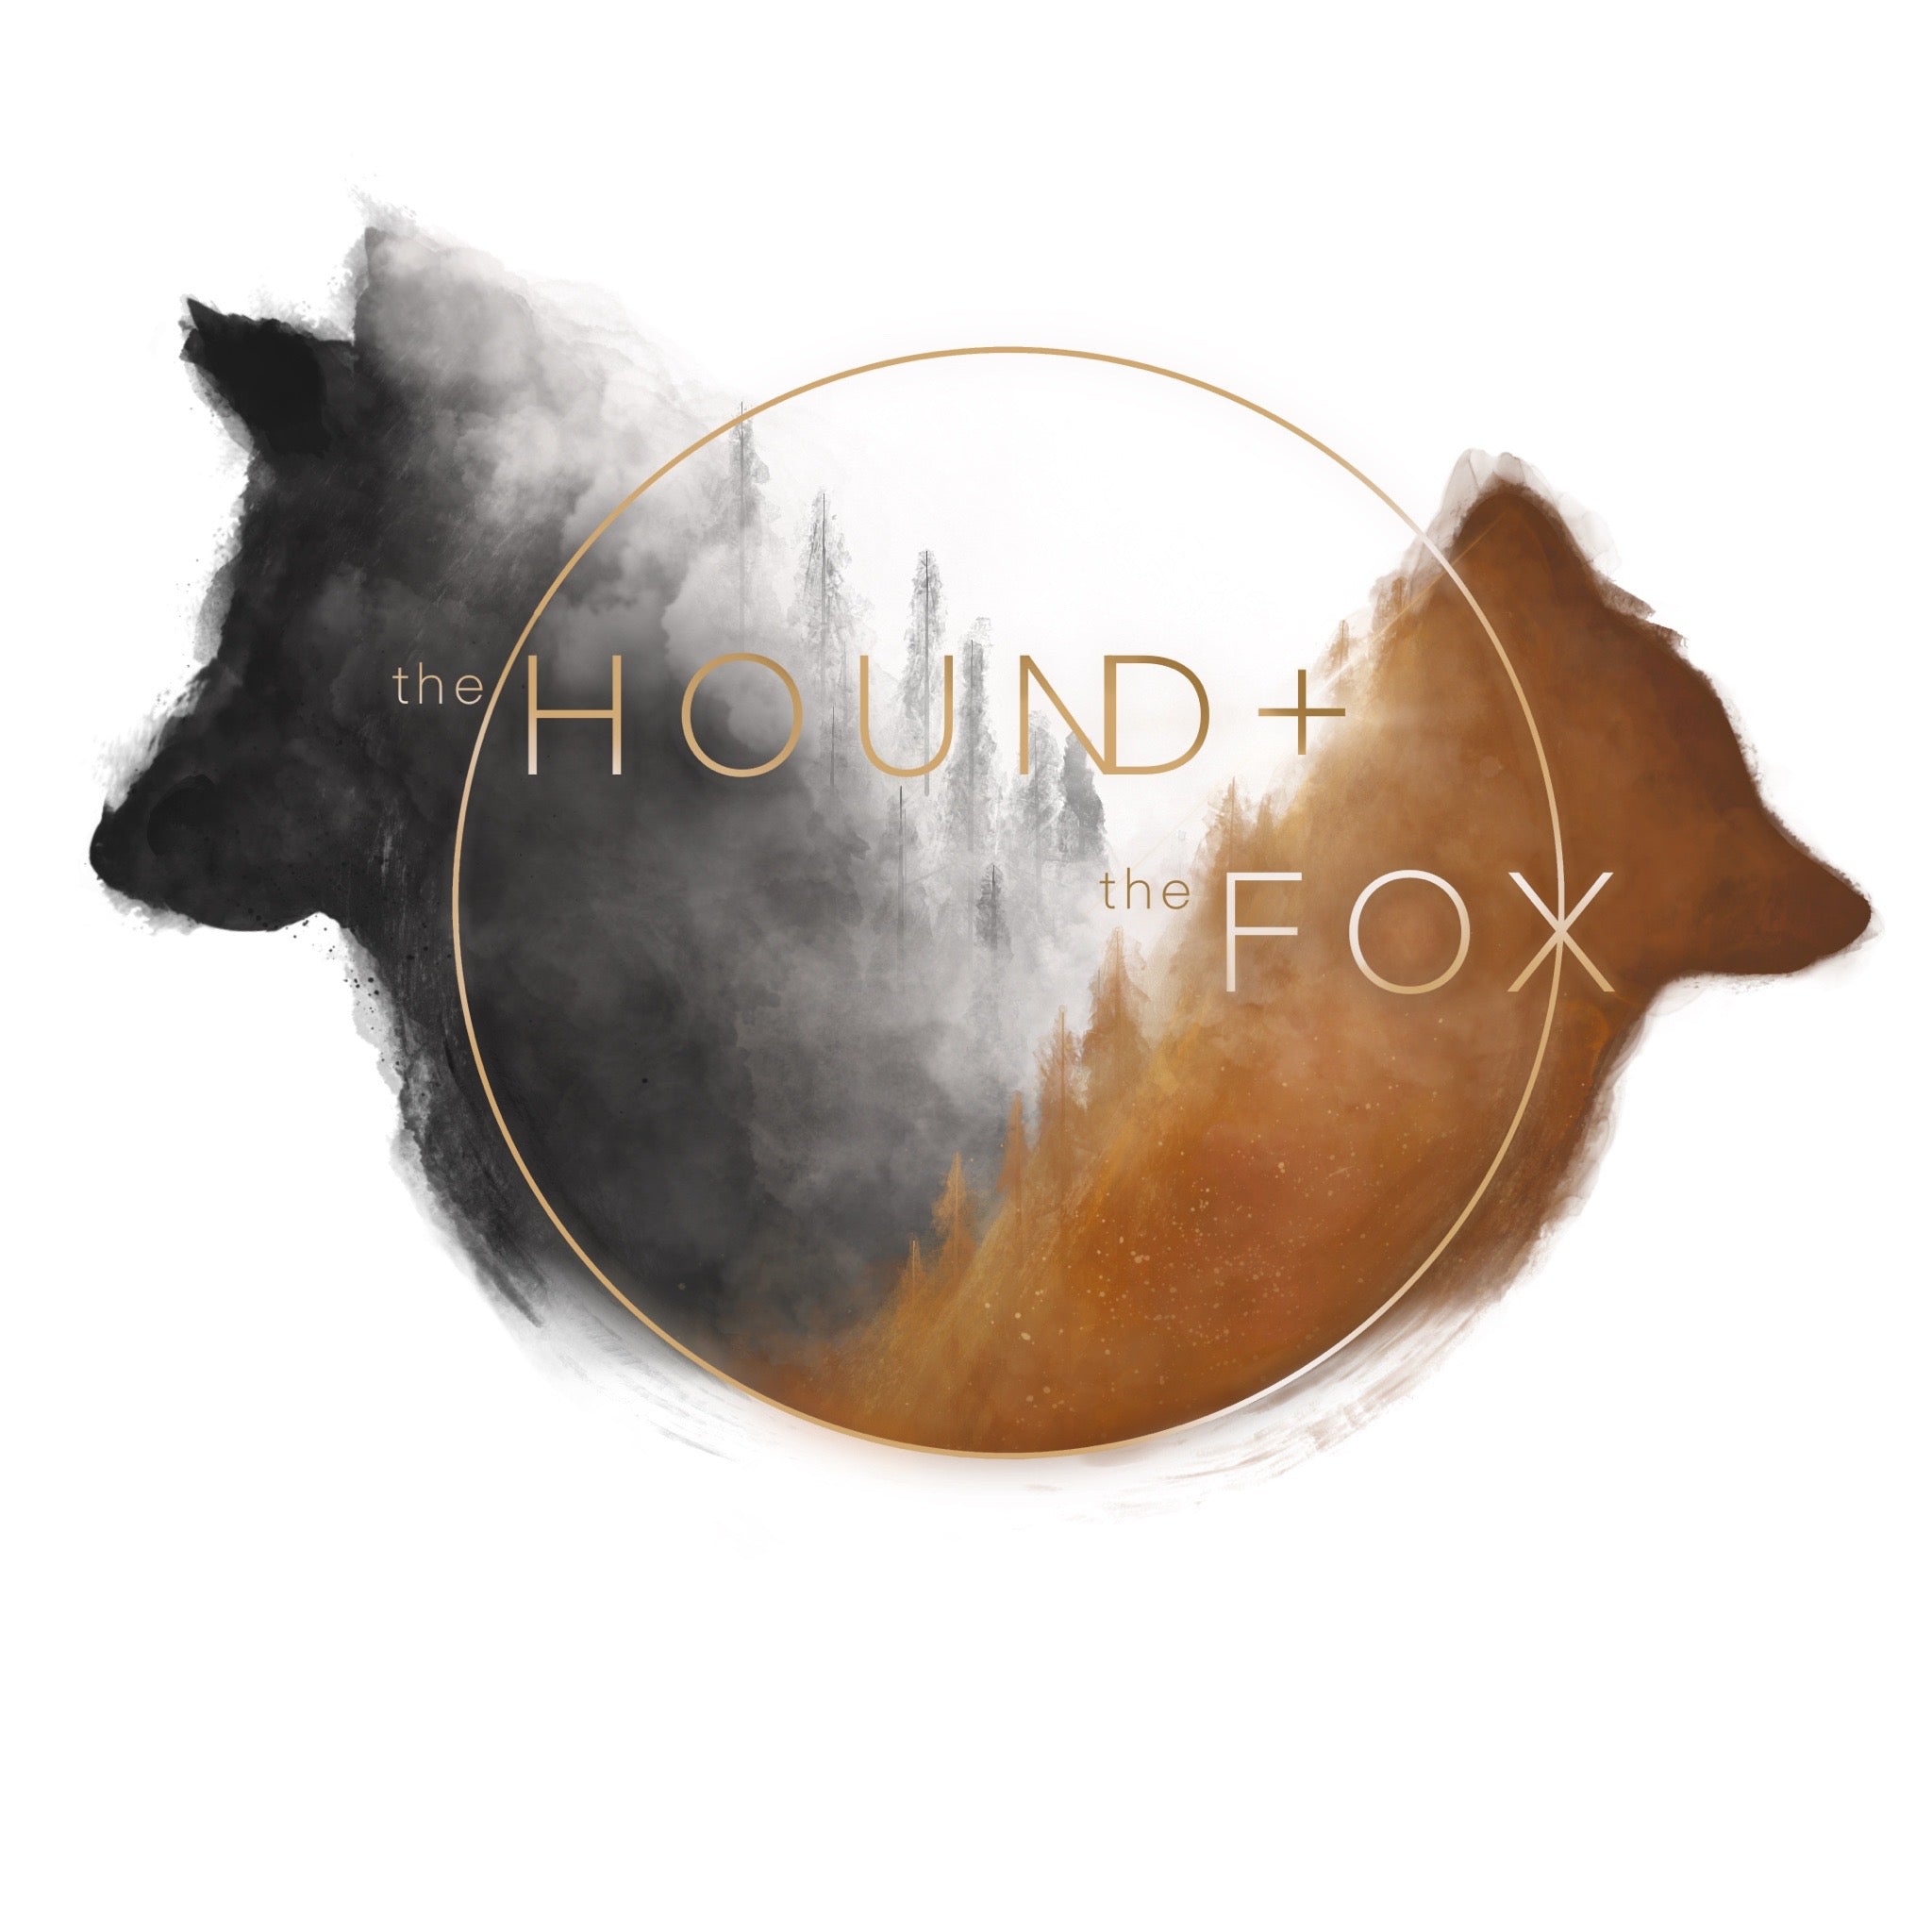 The Hound + The Fox